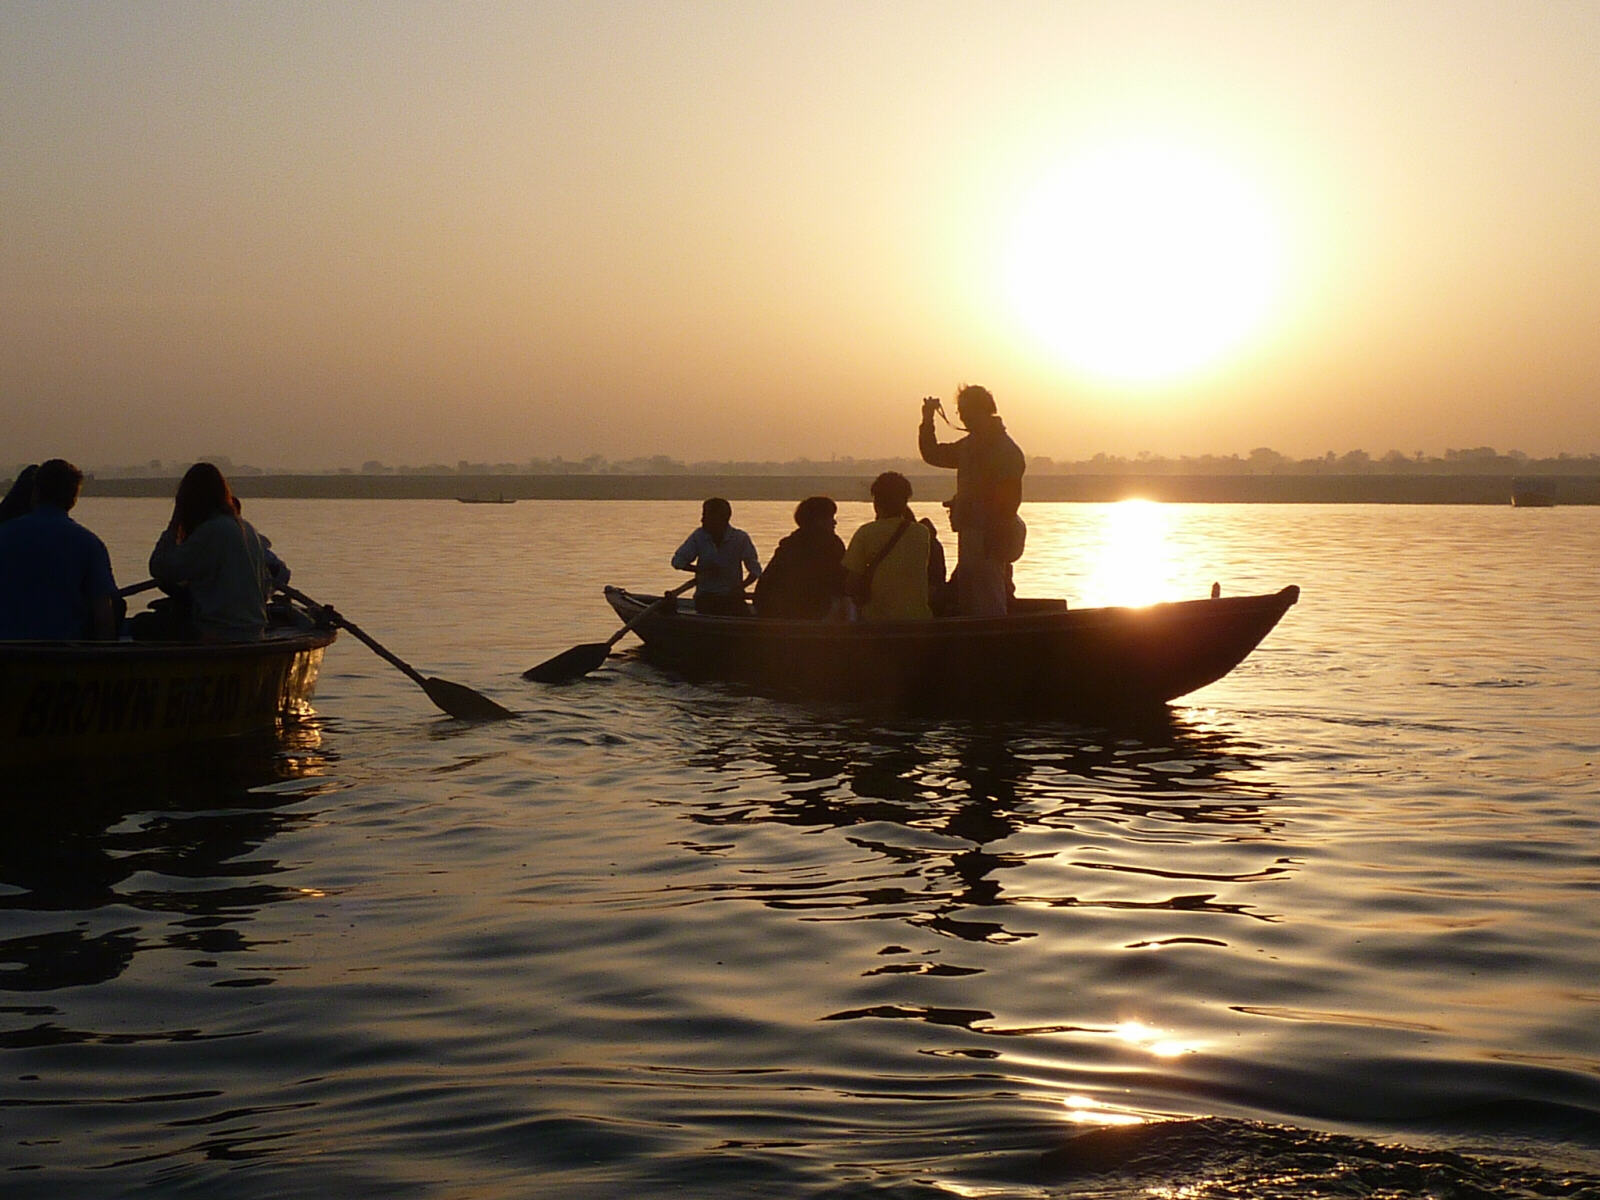 Sunrise over the Ganges at Varanasi, India